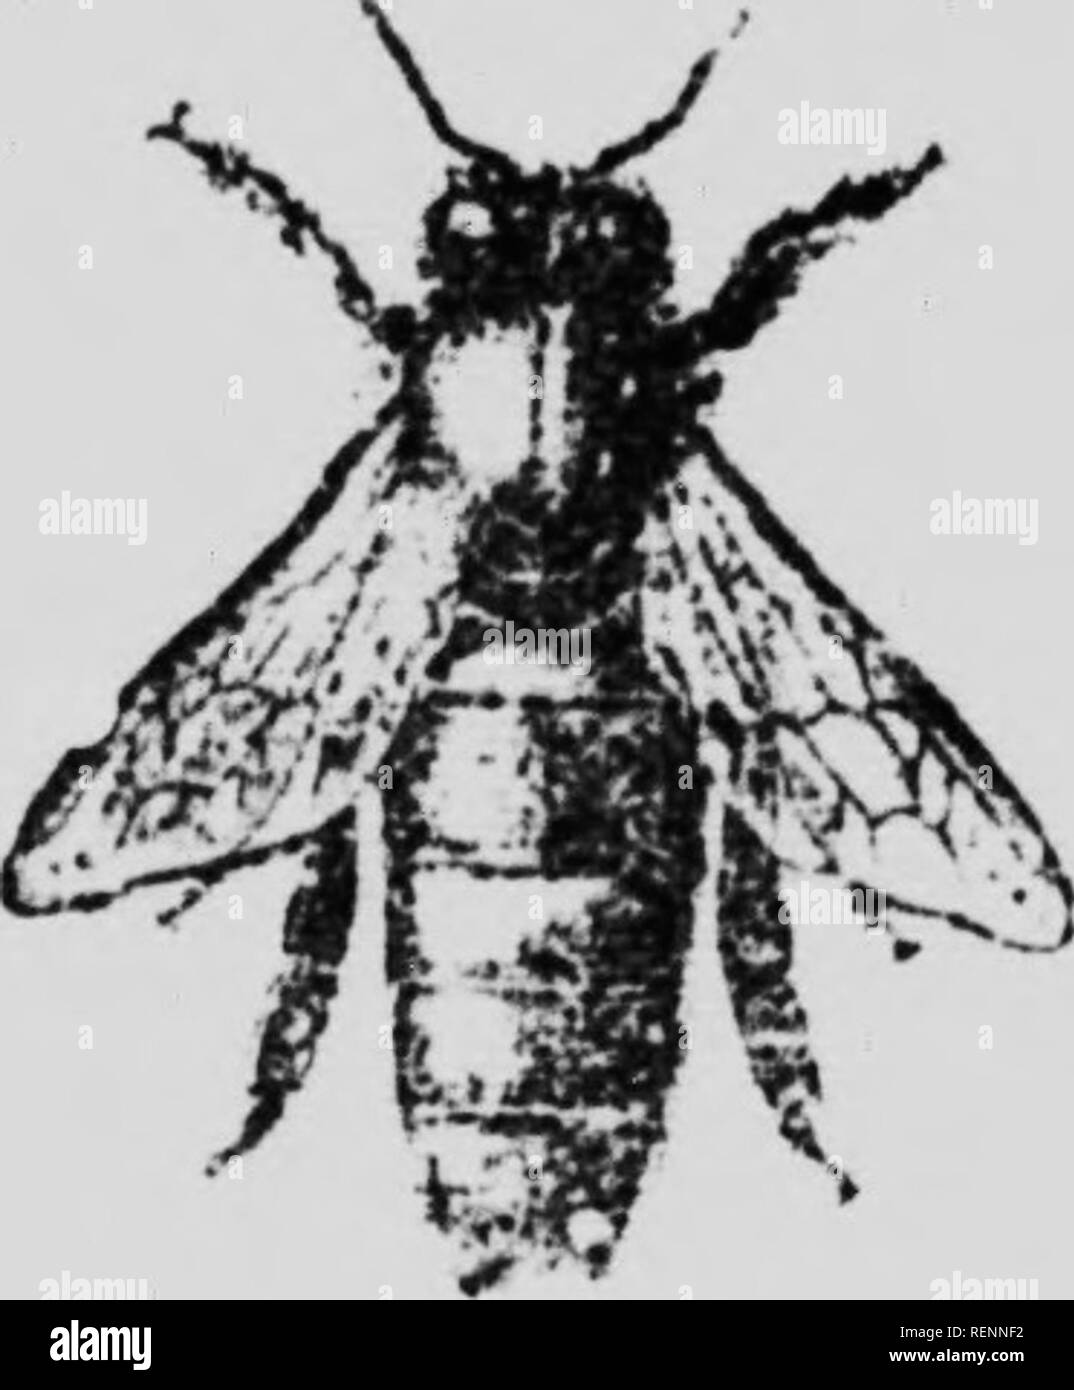 . La ruche canadienne [microforme] : culture des abeilles. ApoÃ¯dÃ©s; Honeybee; Abeille; Bees. L â¢â¢ ii'iiii l&quot;'II|i' a itr il.illll.n 1 .il,i lil.' ;iic I- i|'i.,i.|:|',-|.',. n{â â¢ ^,-i t'nr.irits. (^.â¢iil.ni.-s luit.Mirs npic,,!.., rr,im;ii&gt; .lut i..|,|,,. ,|,. rohipllIC.'l- If llolll Â«le icili,. |,â|- ,.,;|ui .!.â ||i..,v ; imi^ (â¢â¢â¢ tcilllr n'est pas iiiriii.'niissi coiivcijuM.. (ji,. !.. pn-mi.T, en un. i.jn,. VI.â¢!â¢;,'.â¢ iir p.Mit pas .'â¢Uc appol.'-r iin-iv, Ui.'lis ipi.- !.â¢ nom .le nini- (Miiviiiit Ã¹ toutes lus plia.^,ist&lt;'iictr i;uucoup plus ullonifÃ© ,pu! Stock Photo